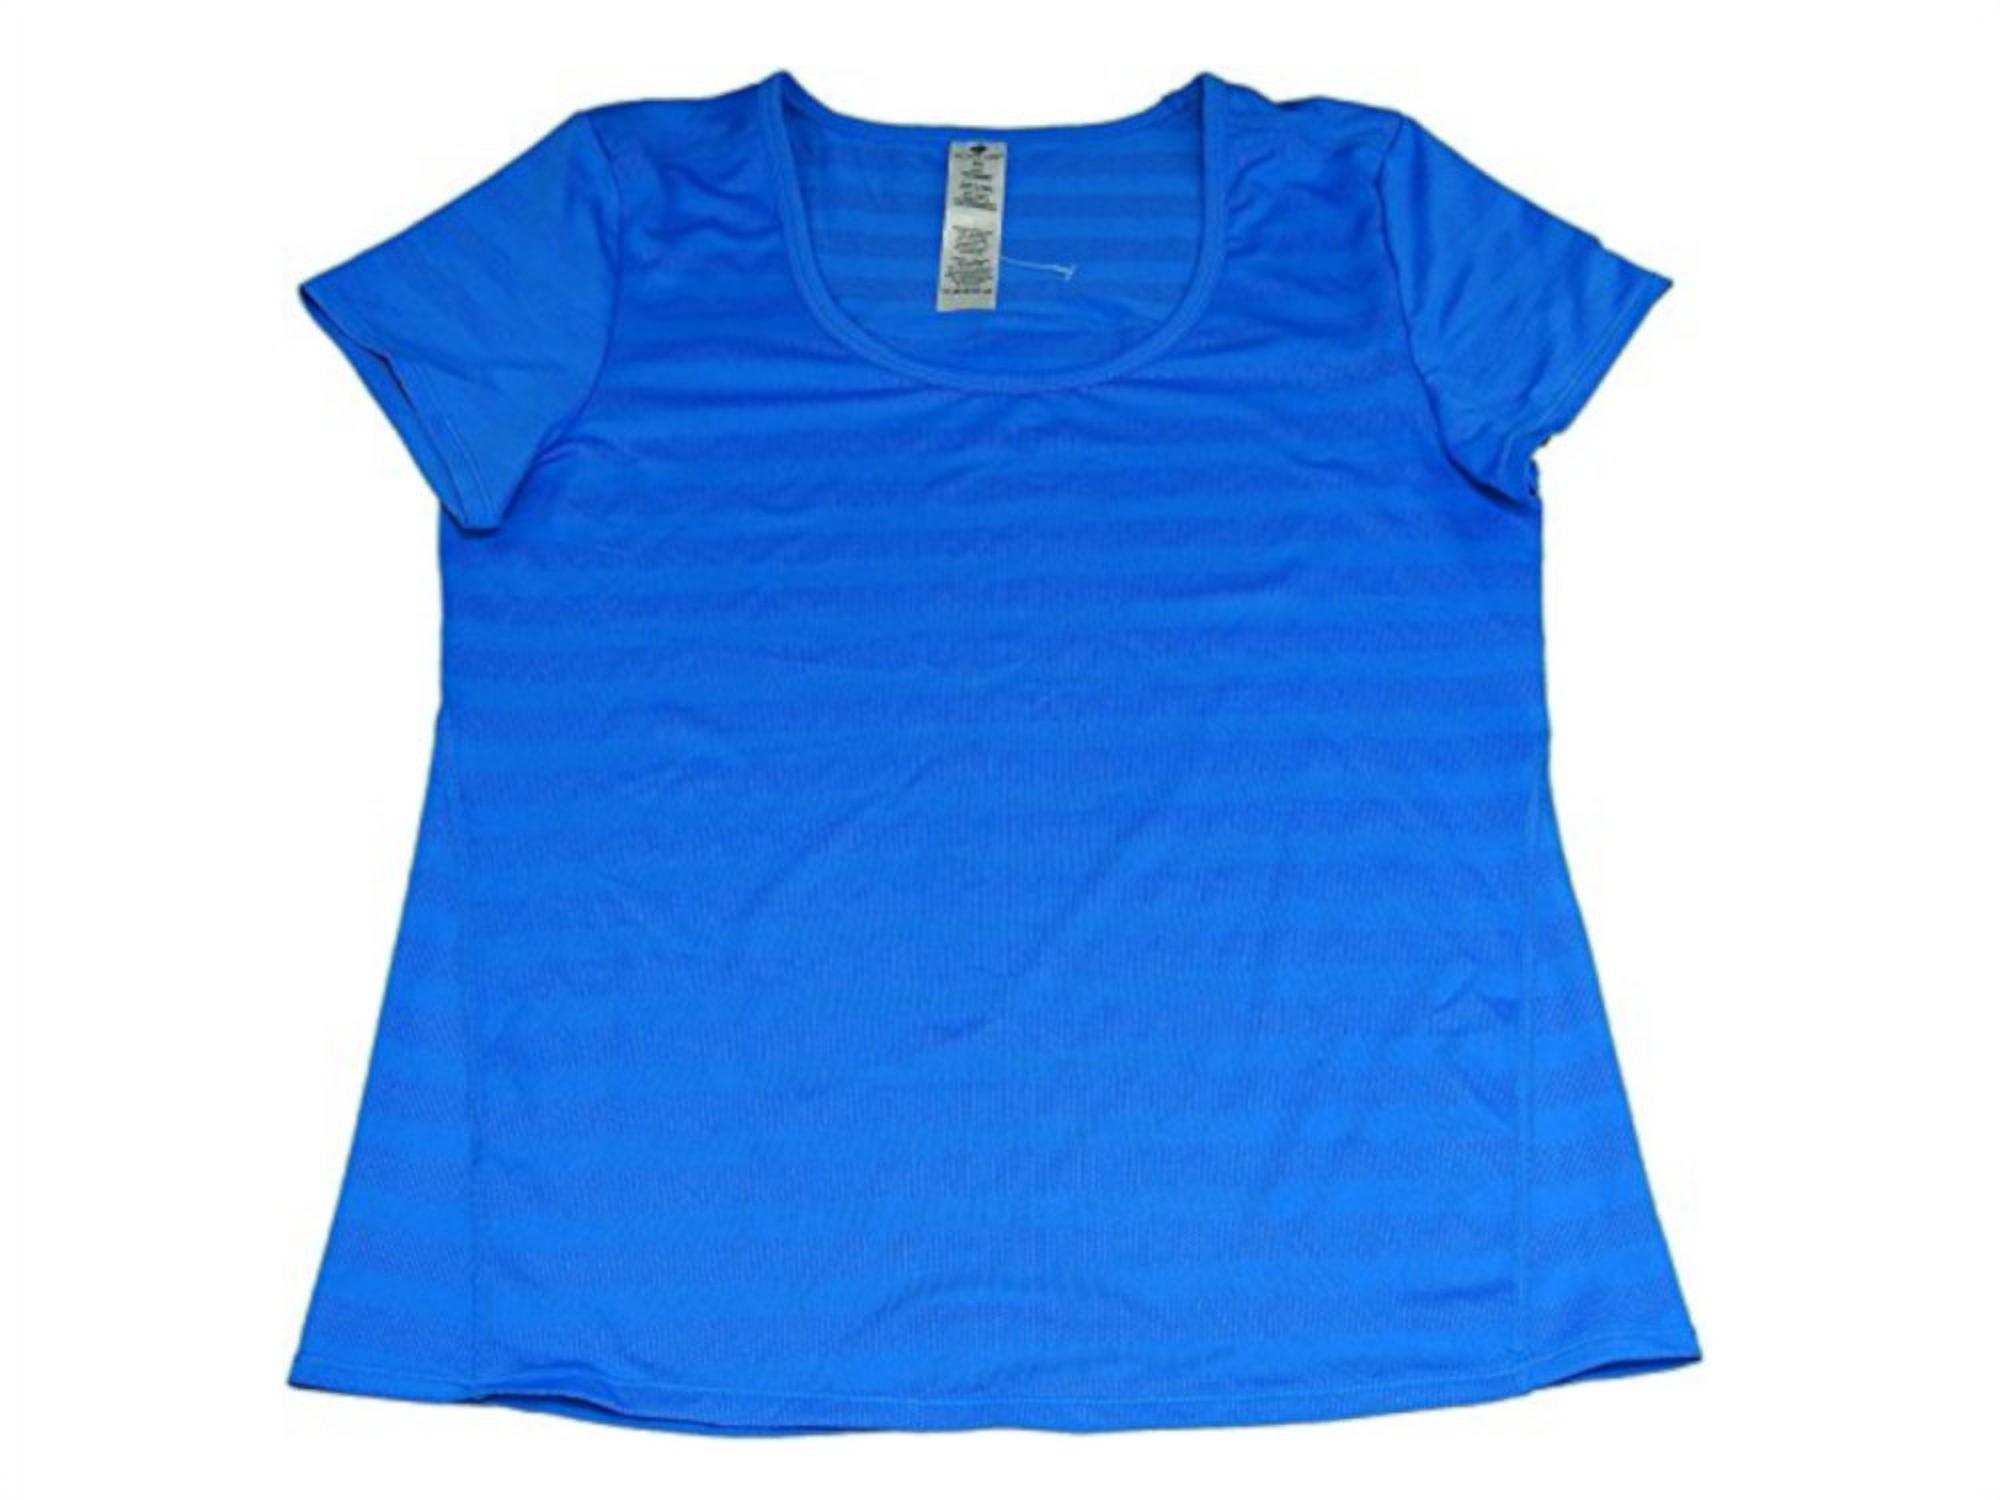 Active Life Womens Size Small Performance Tonal Stripe T-Shirt, Lightning Blue - image 1 of 1